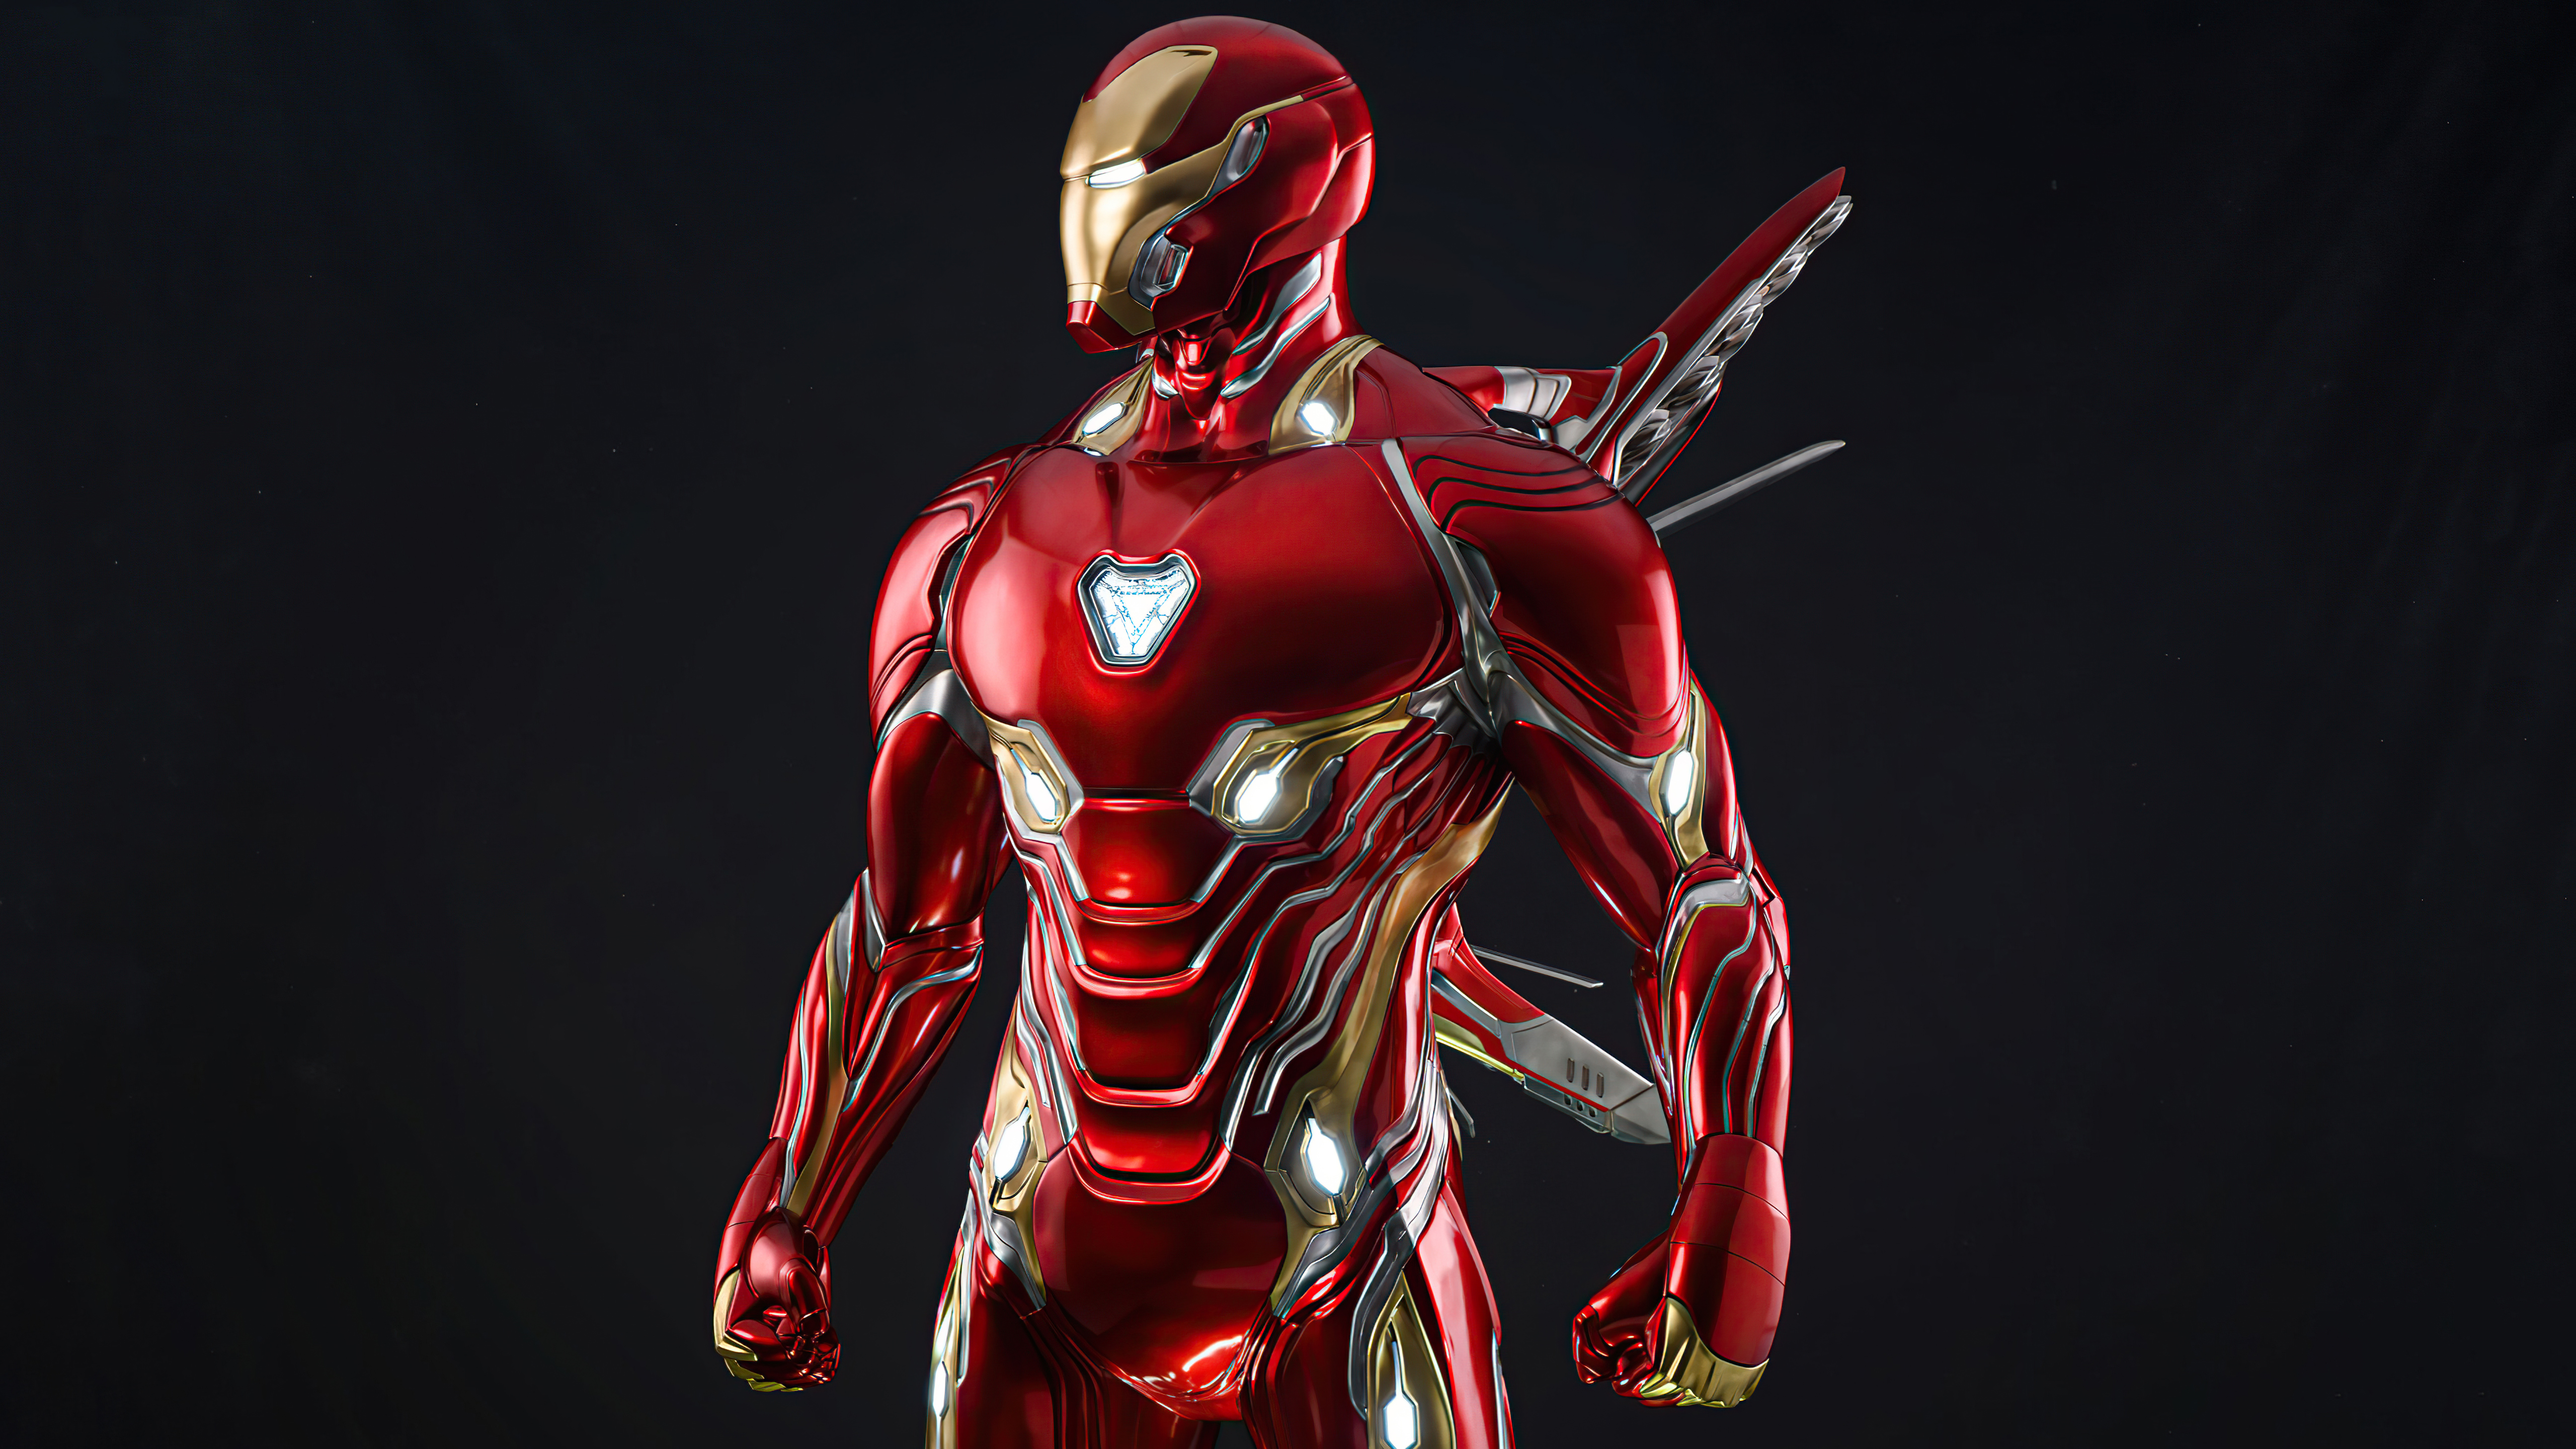 iron man mechanical suit 4k 1619216039 - Iron Man Mechanical Suit 4k - Iron Man Mechanical Suit 4k wallpapers